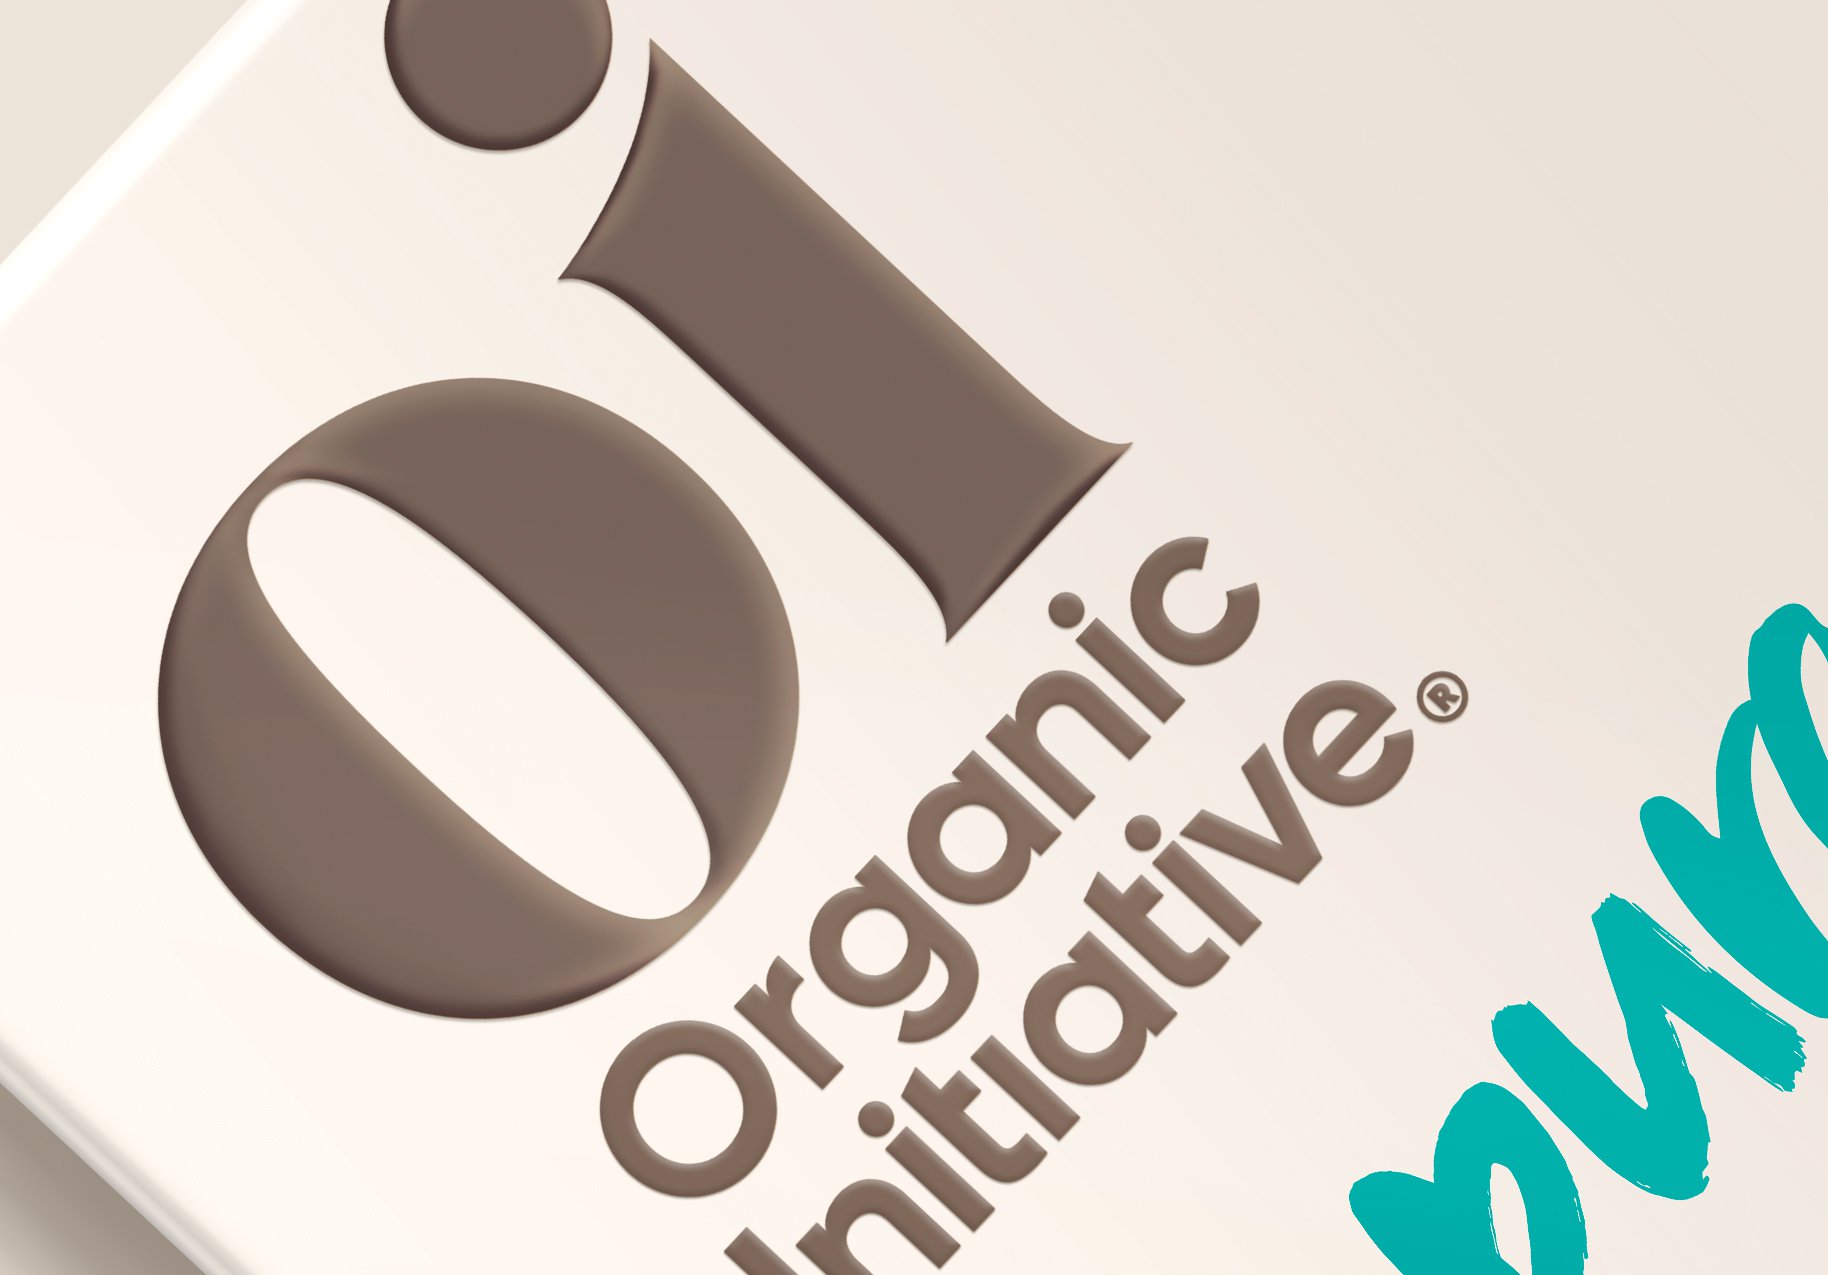 Organic Initiative image